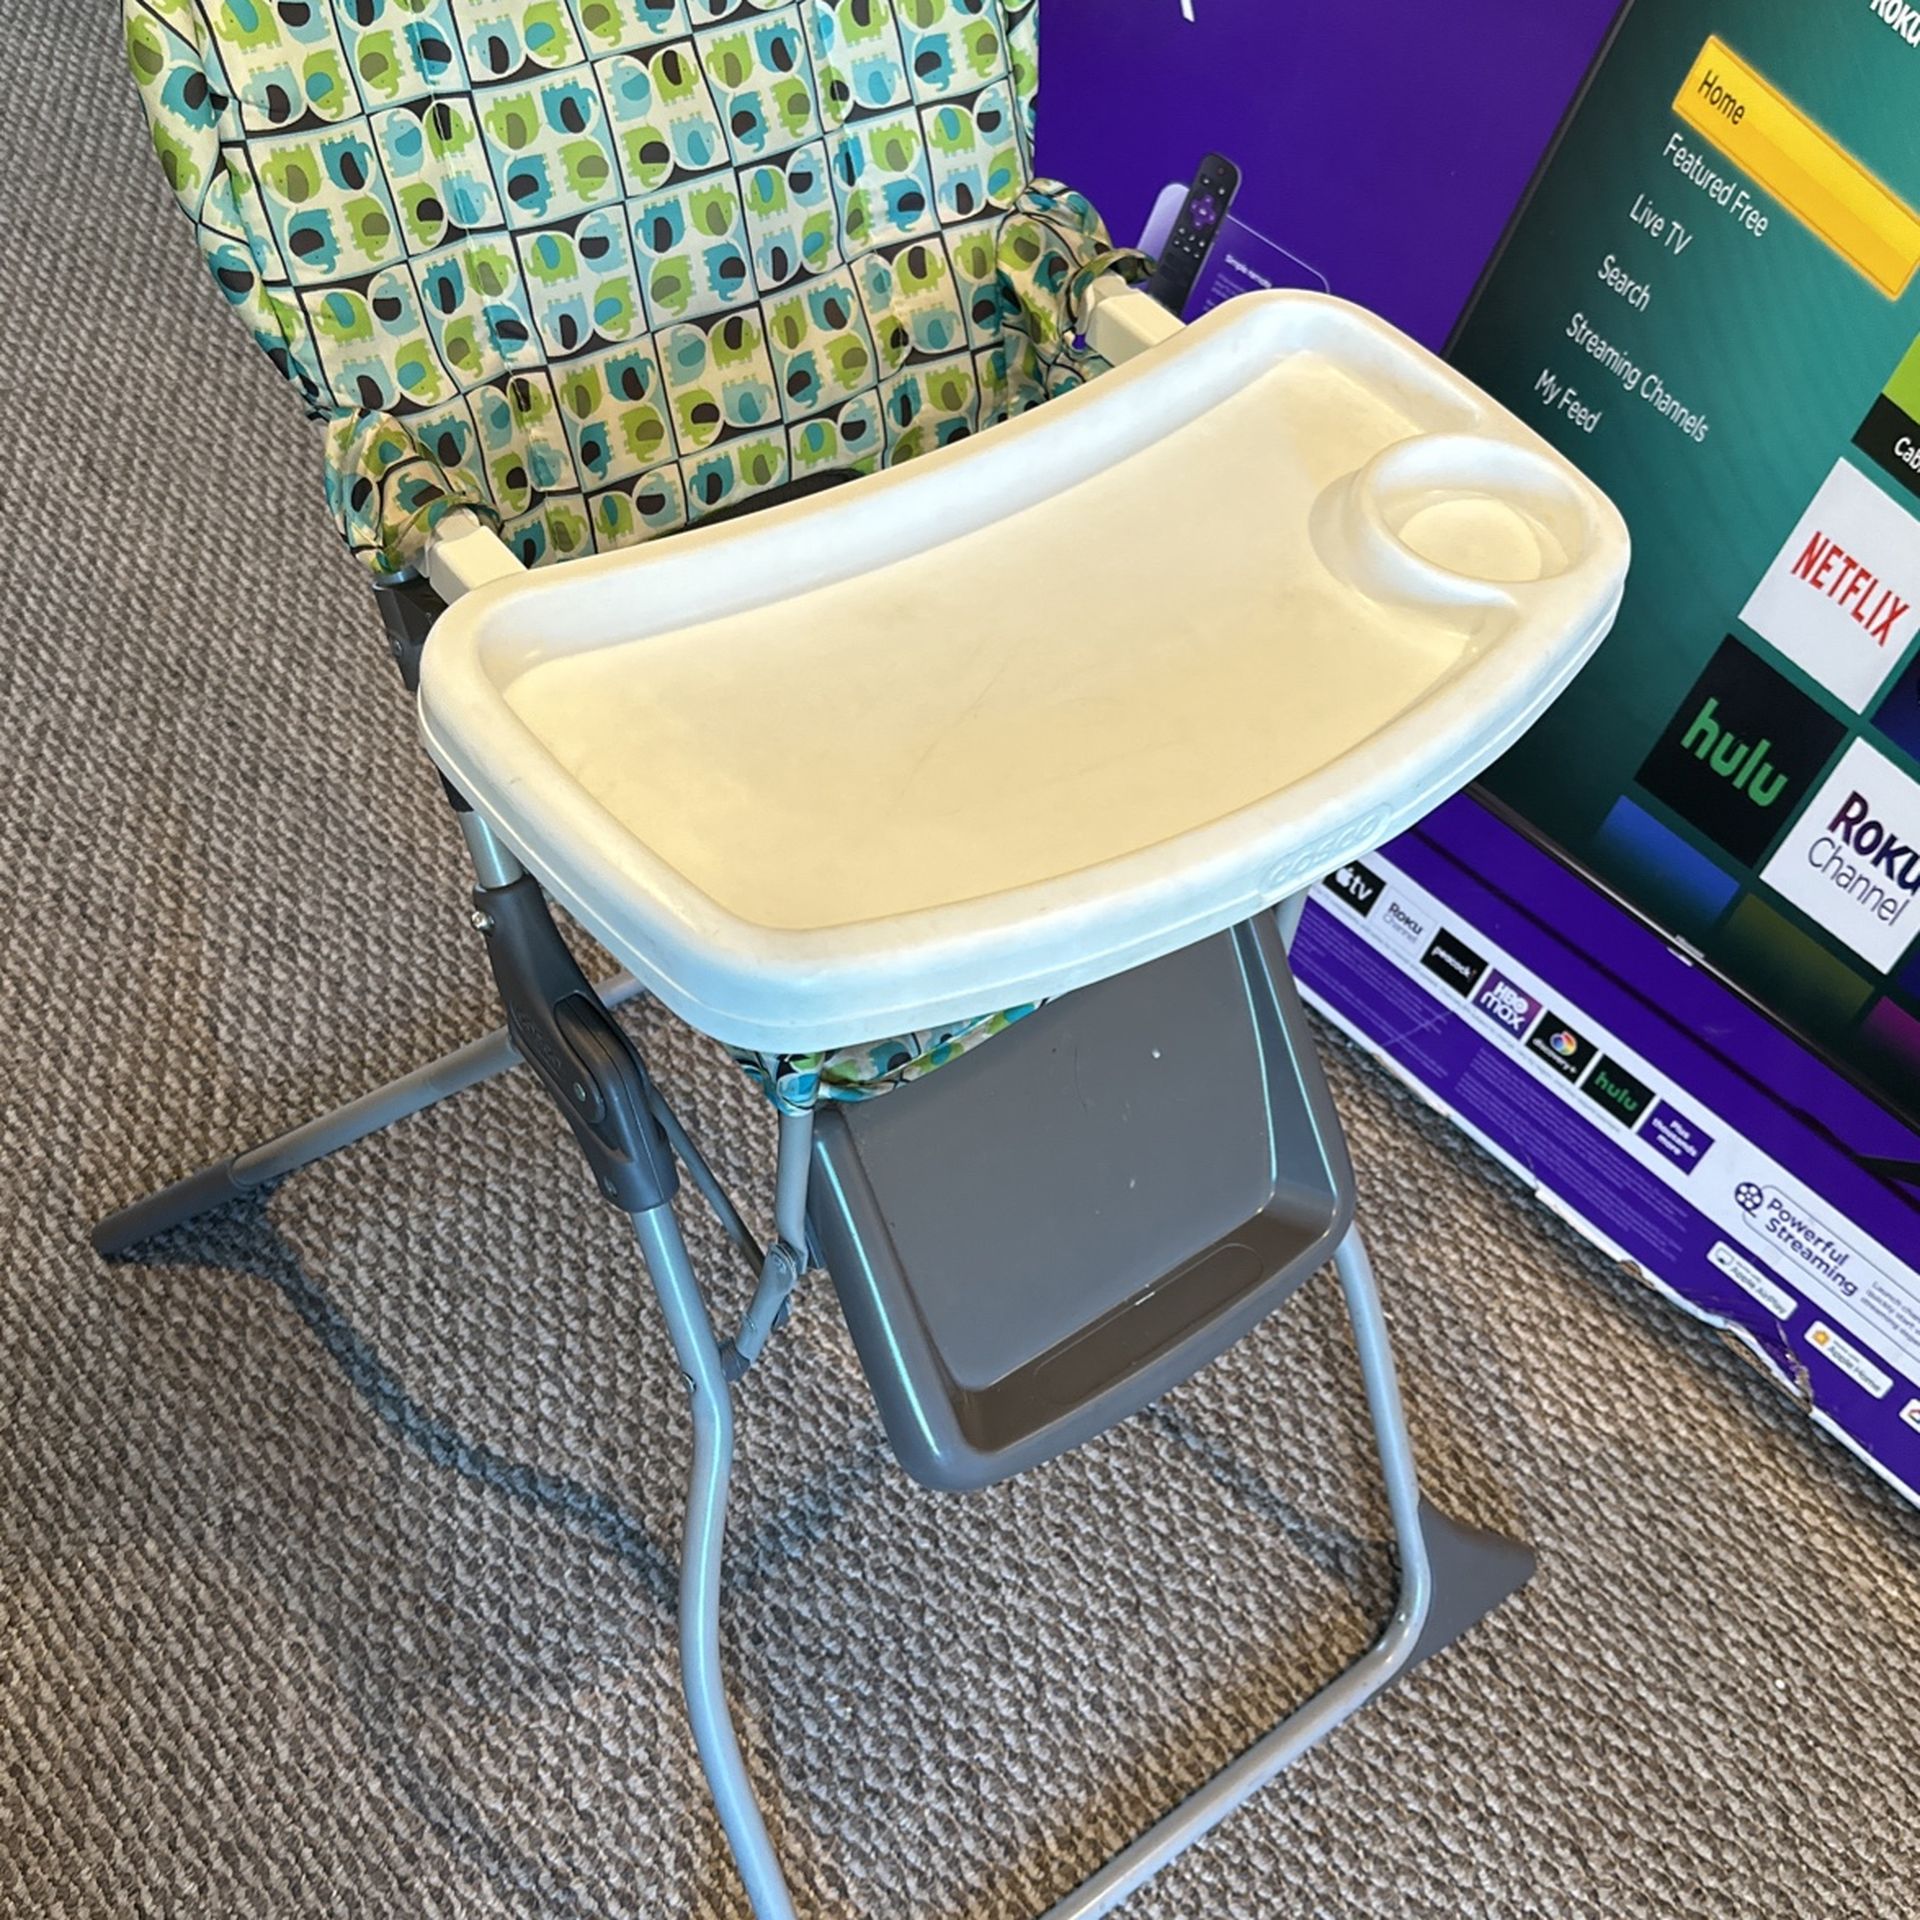 Foldable Toddler Feeding Chair